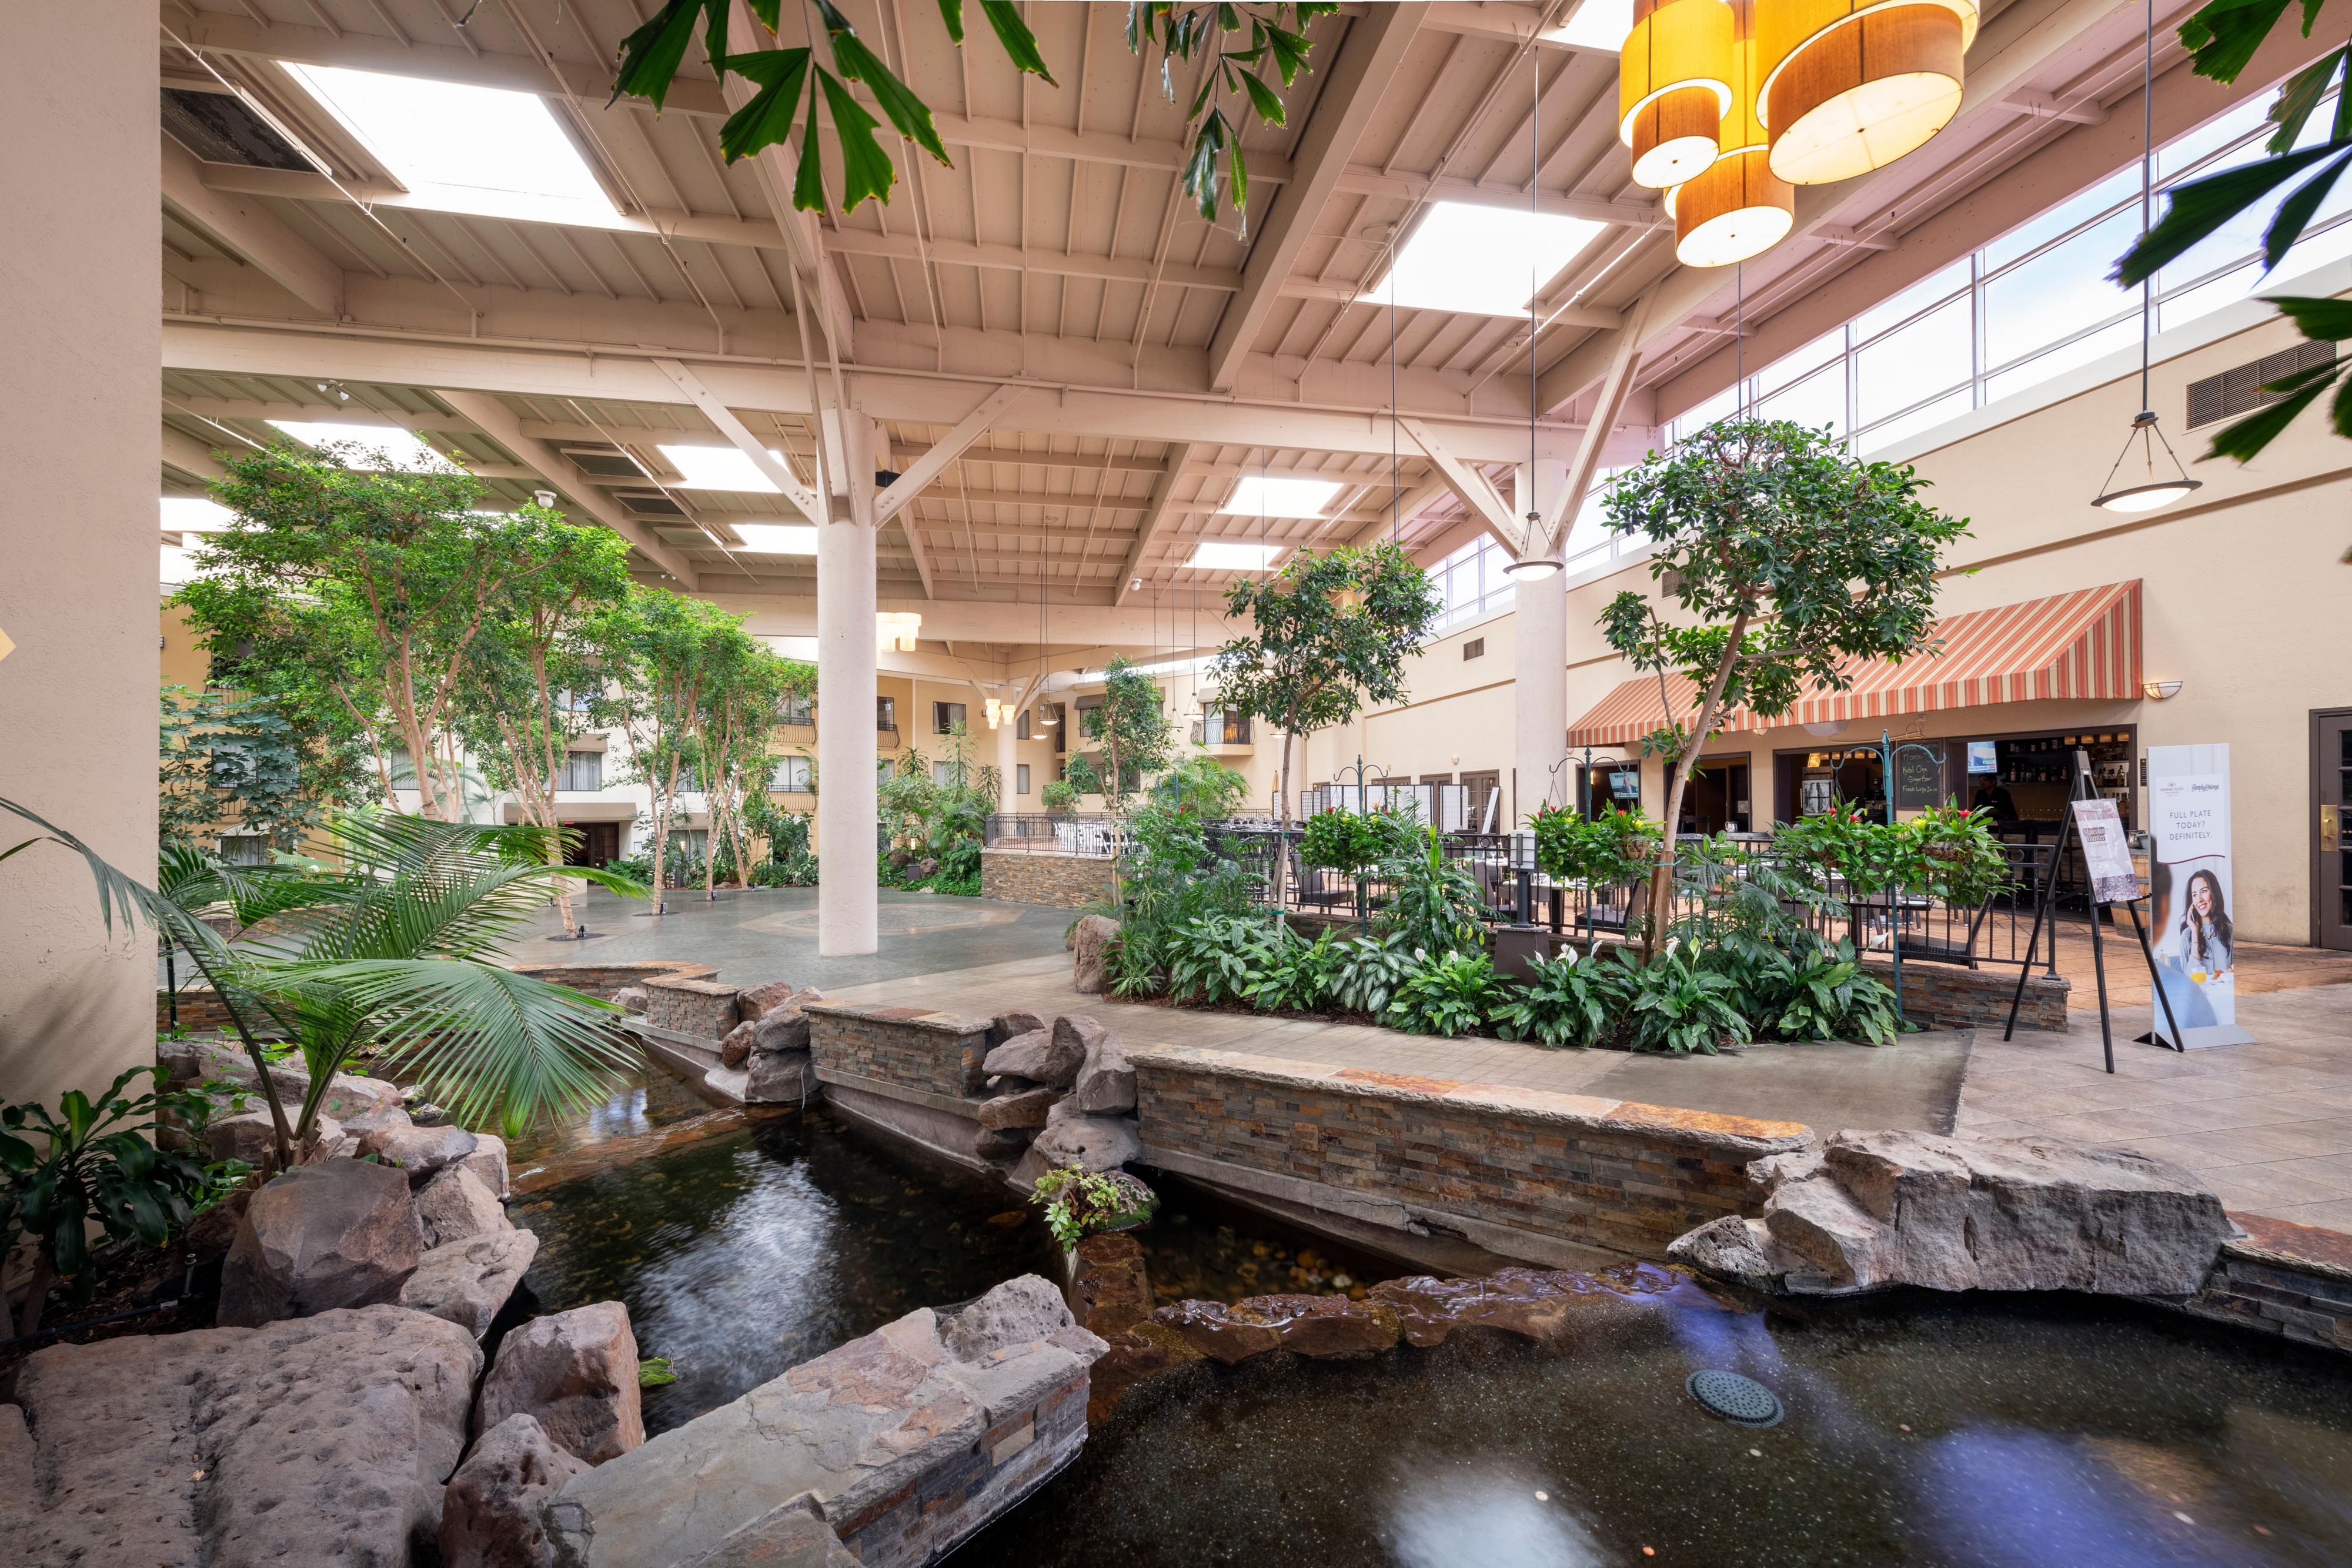 Take in lush greenery in our lobby Atrium